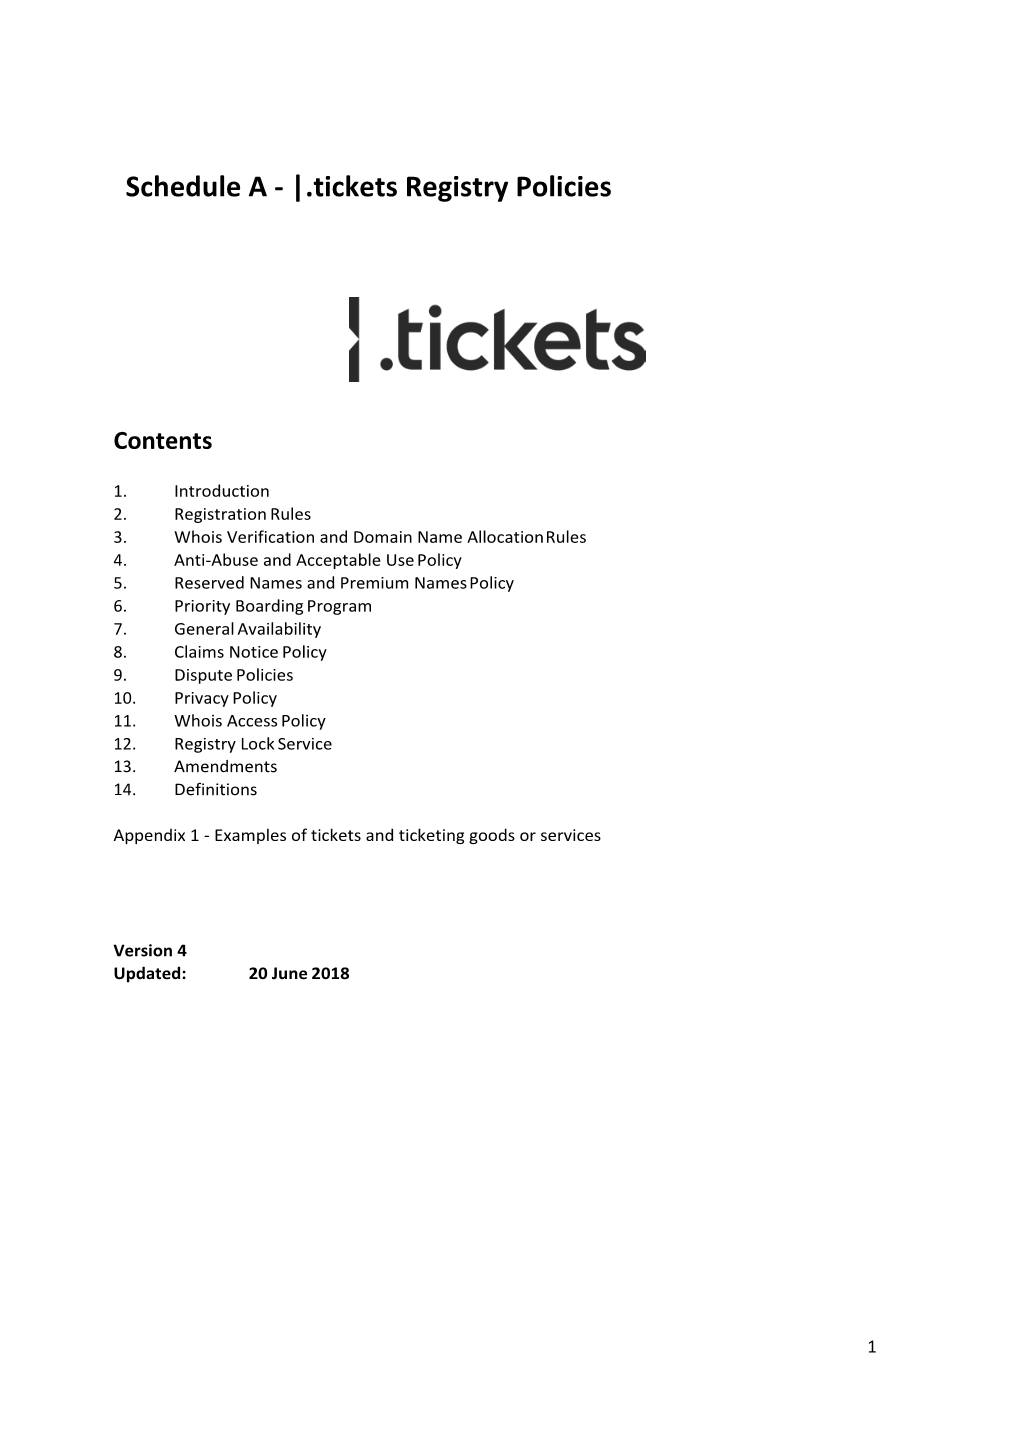 Schedule a - |.Tickets Registry Policies